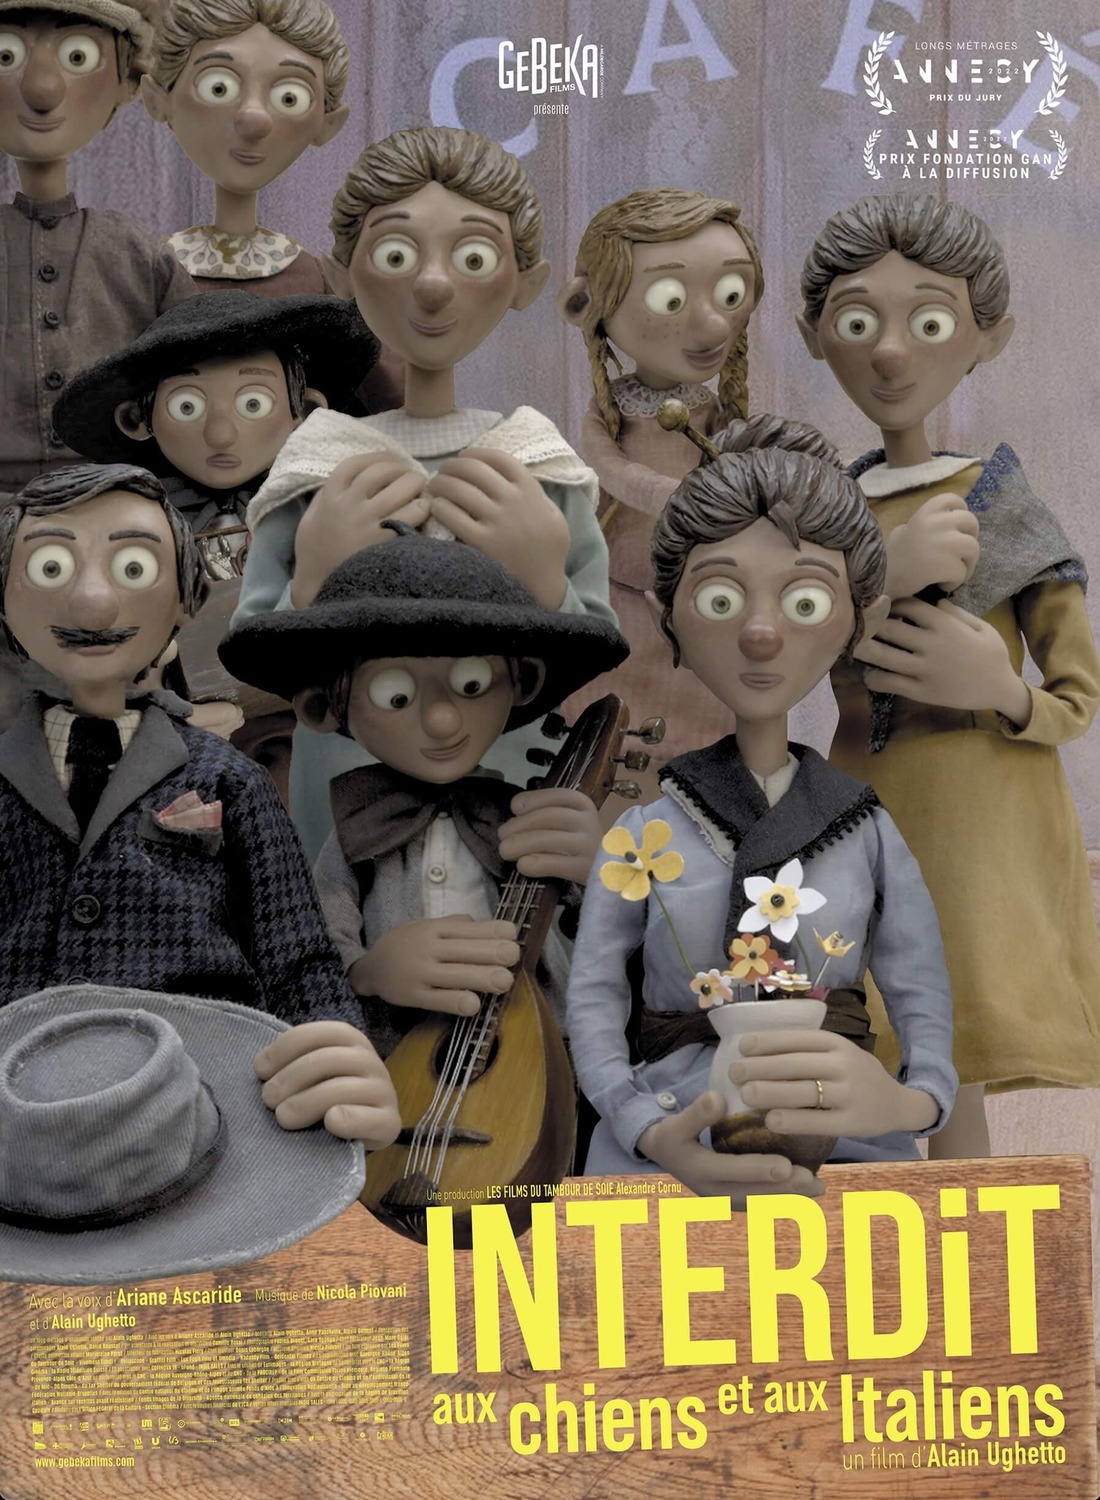 Extra Large Movie Poster Image for Interdit aux chiens et aux Italiens 